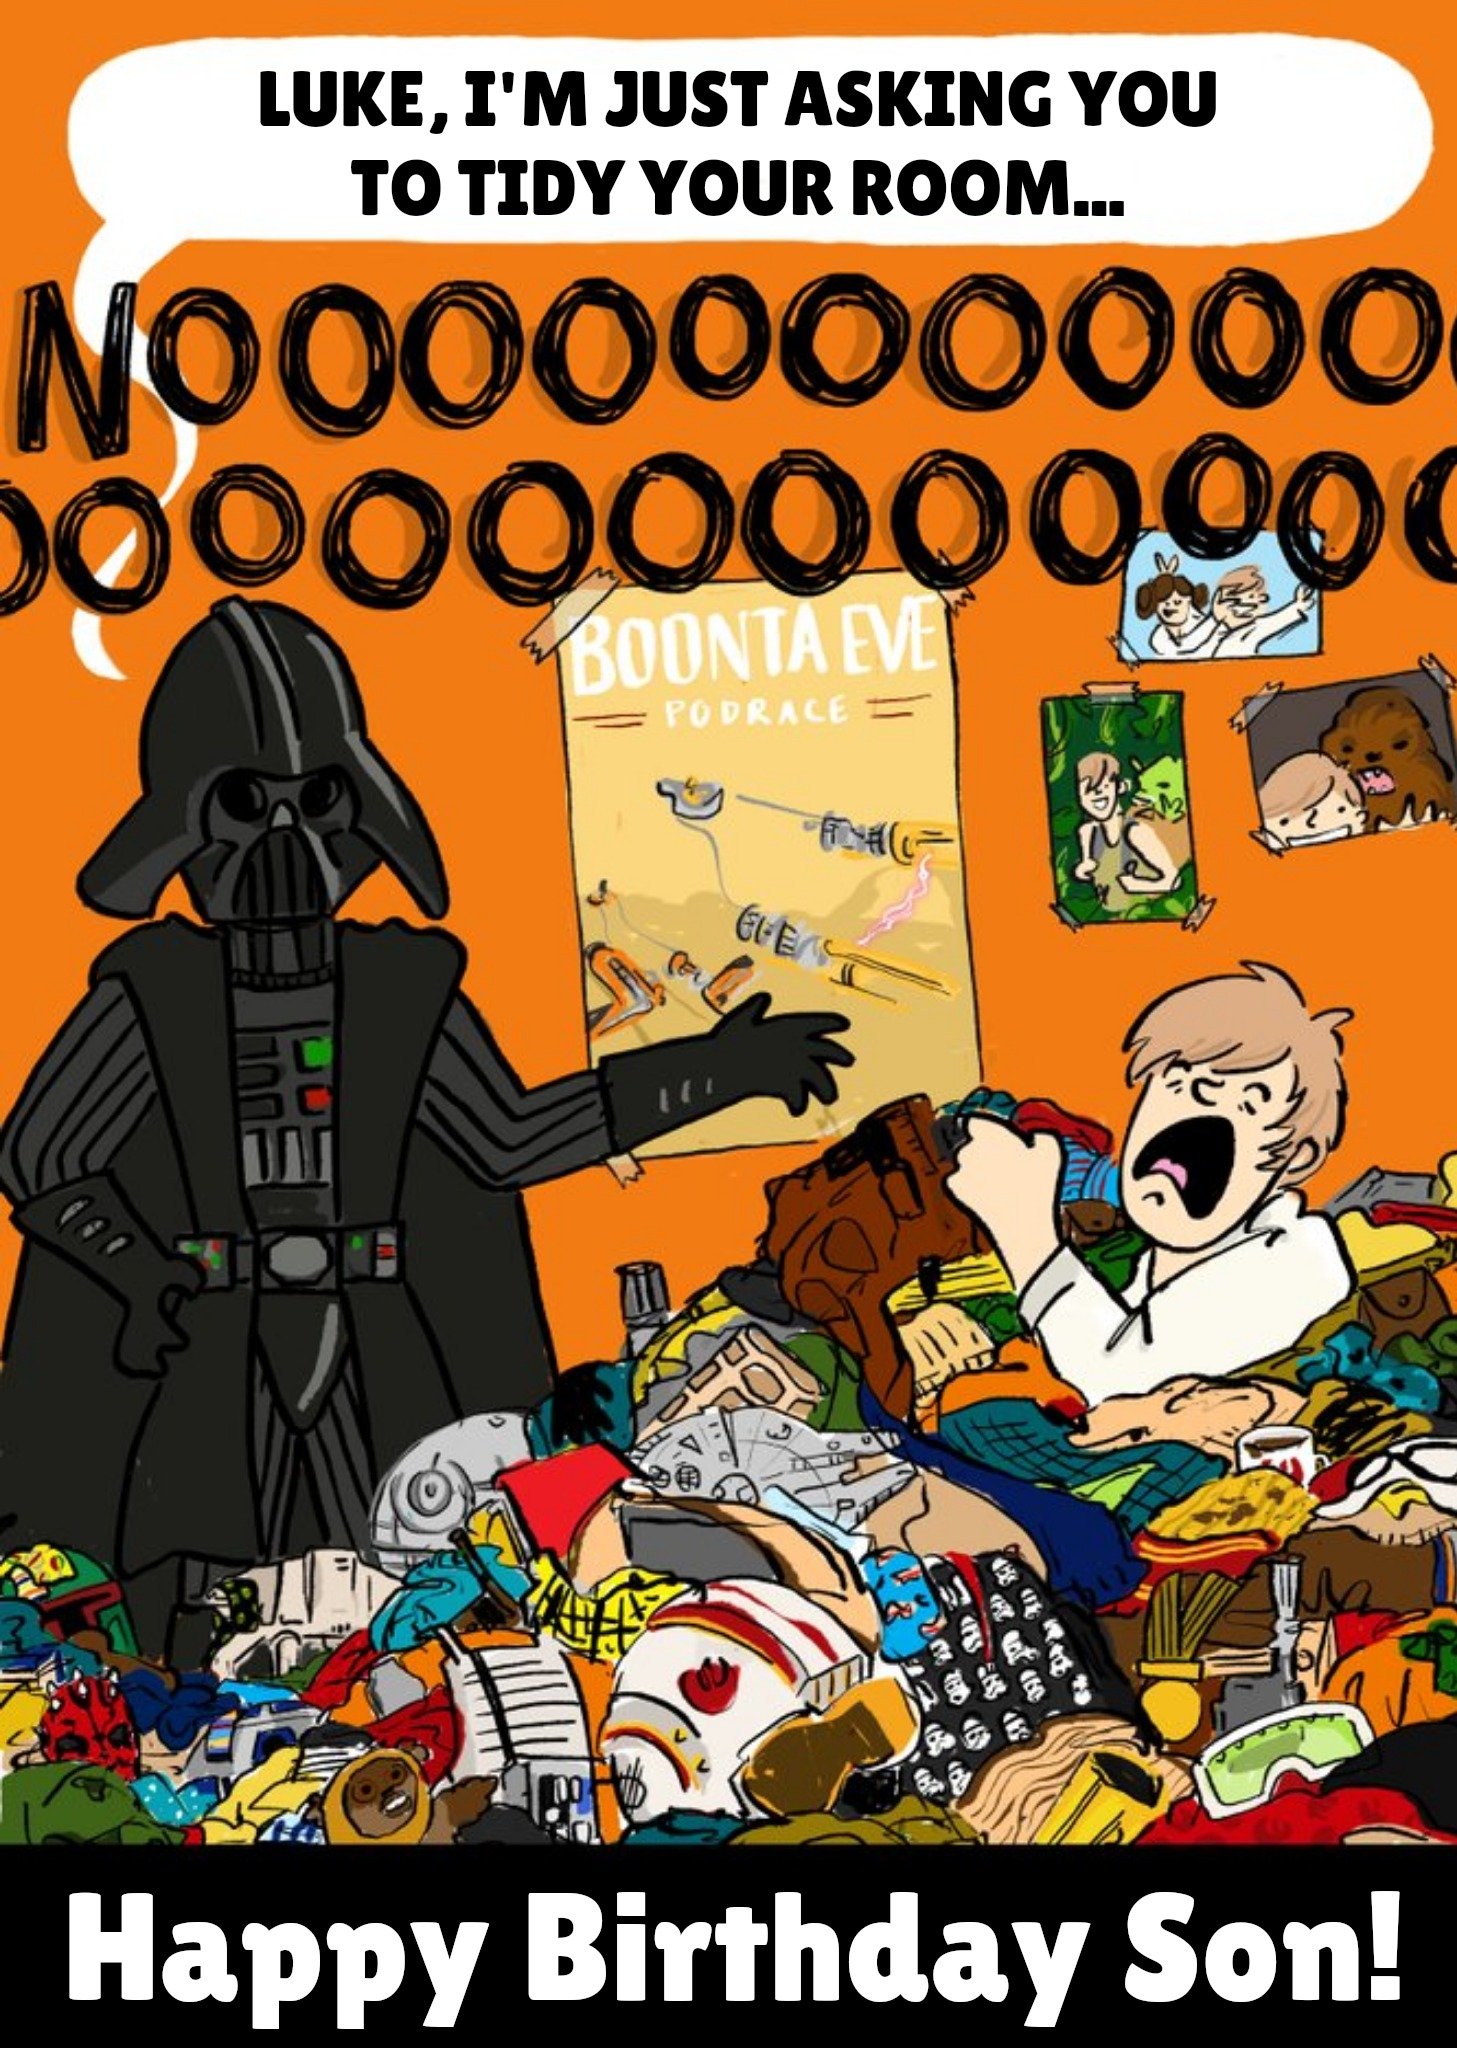 Disney Funny Star Wars Darth Vader Luke Skywalker Birthday Card - Son, Large